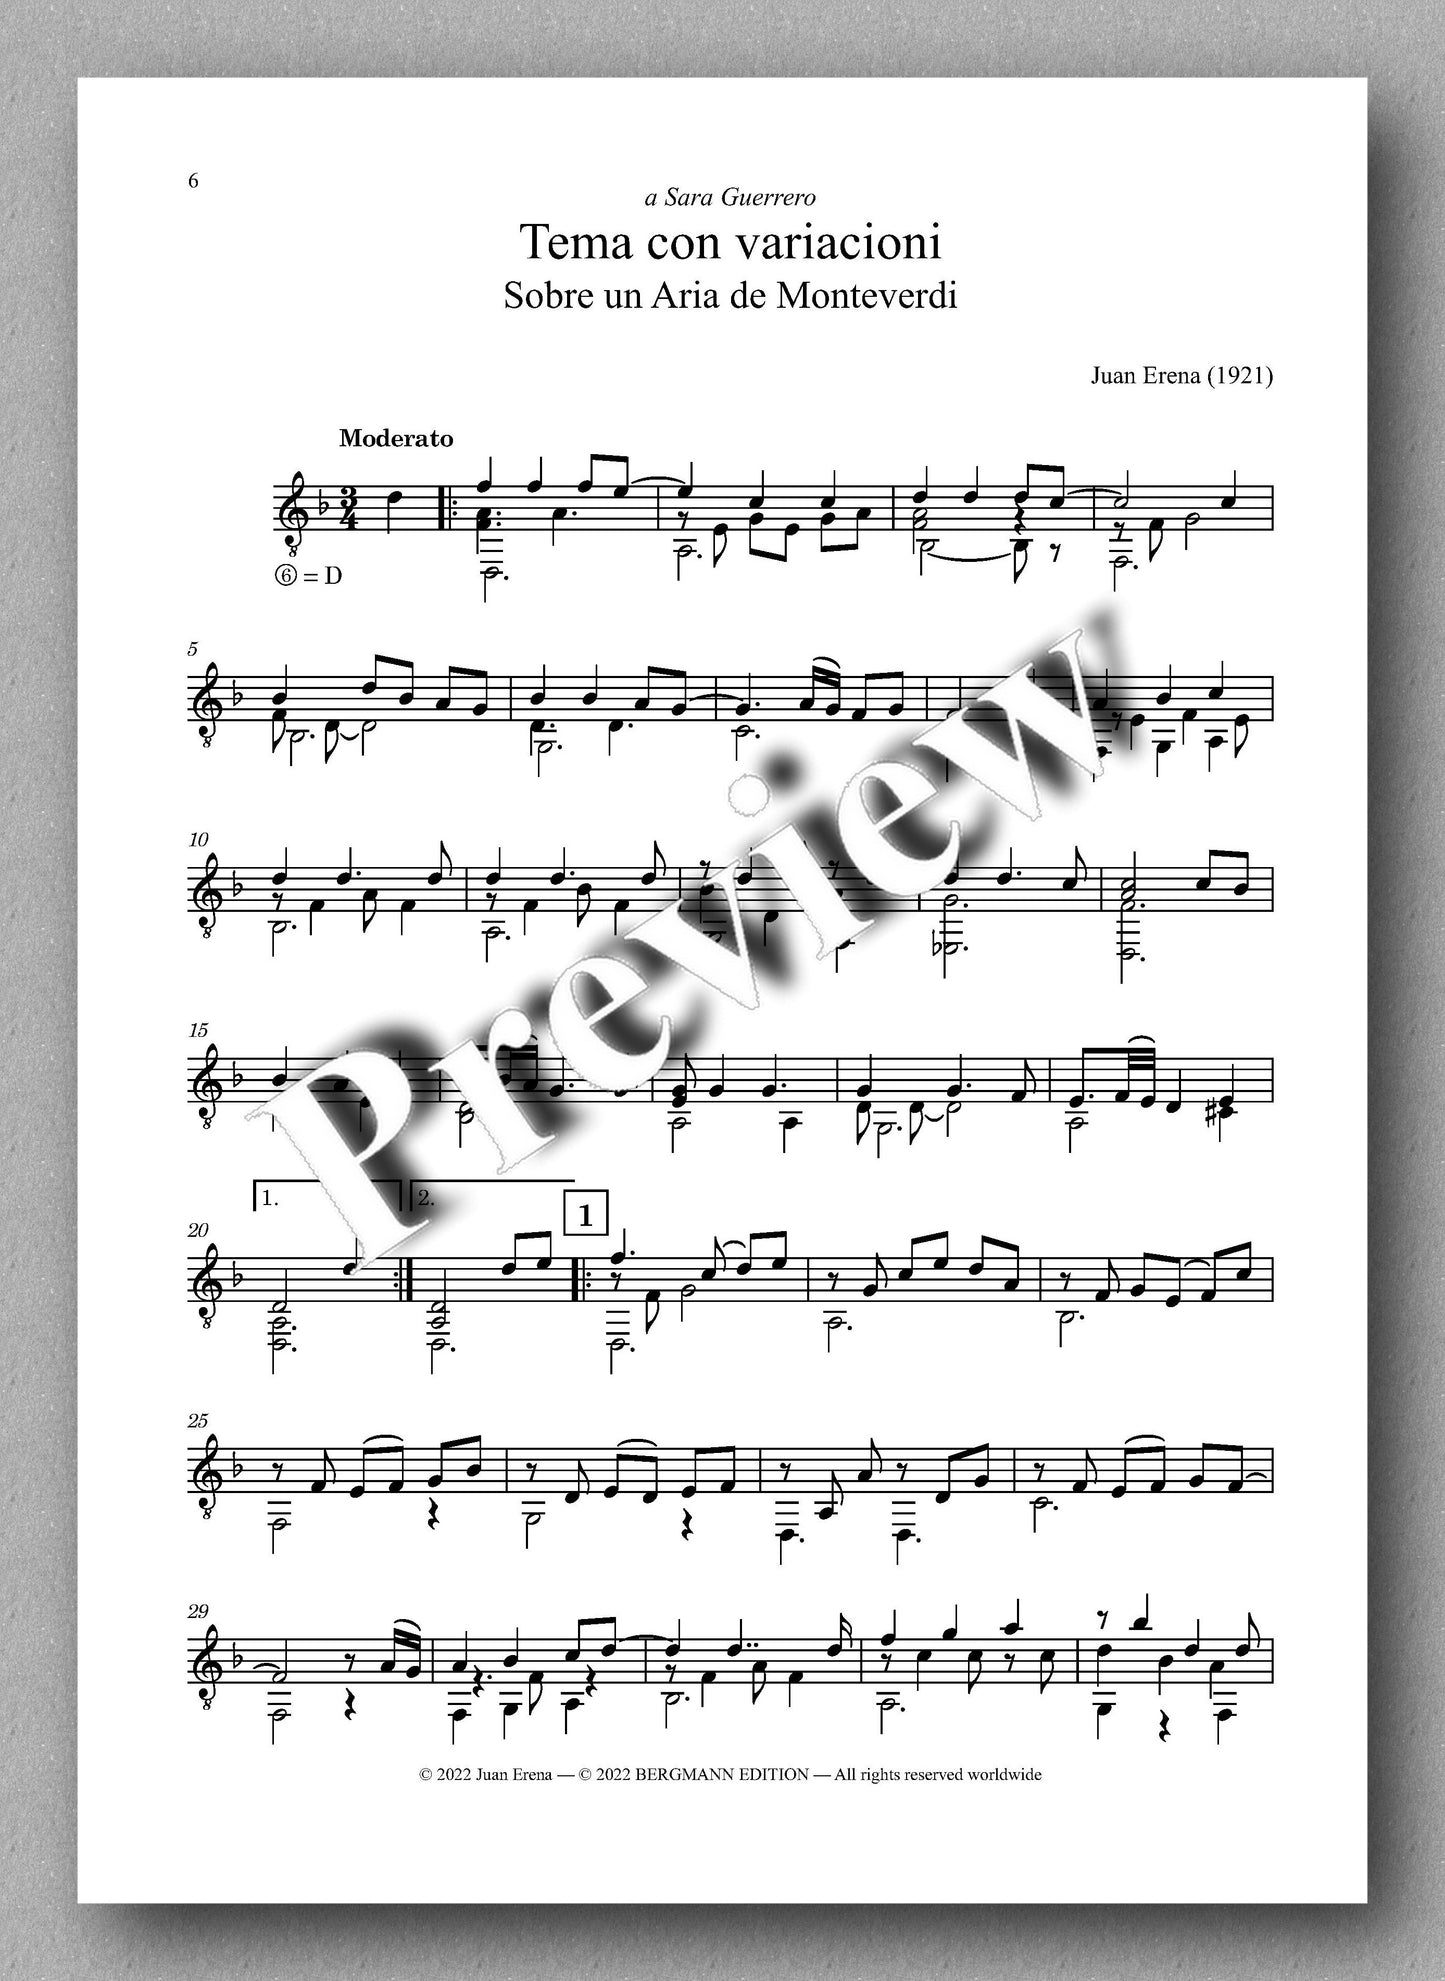 Erena, Tema con variacioni, Sobre un Aria de Monteverdi - music score 1